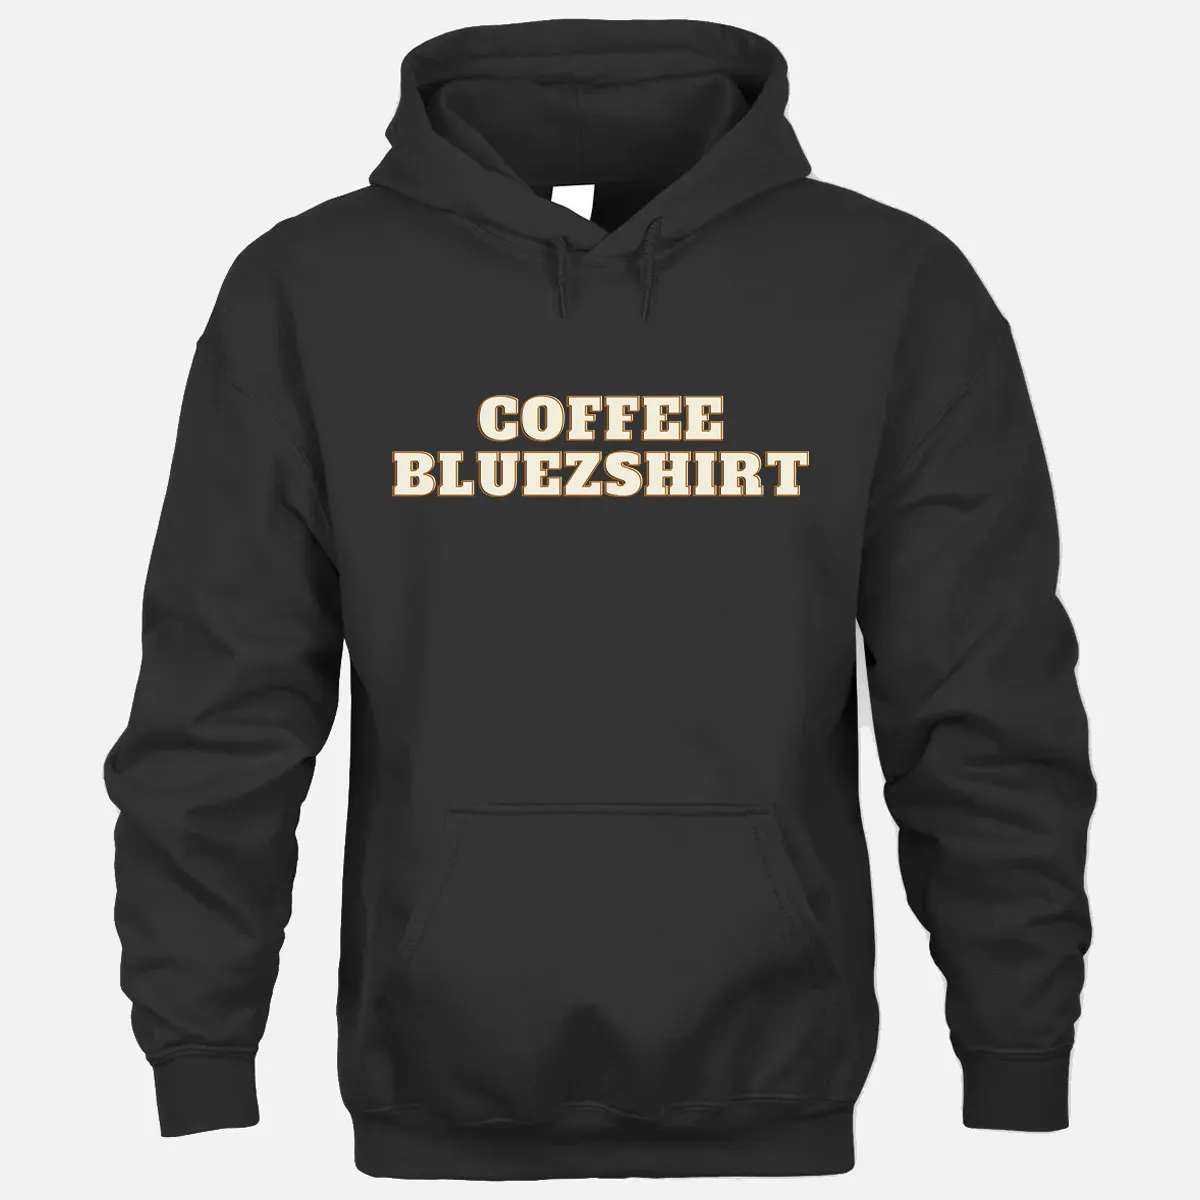 Coffee Bluezshirt Hoodie - Black